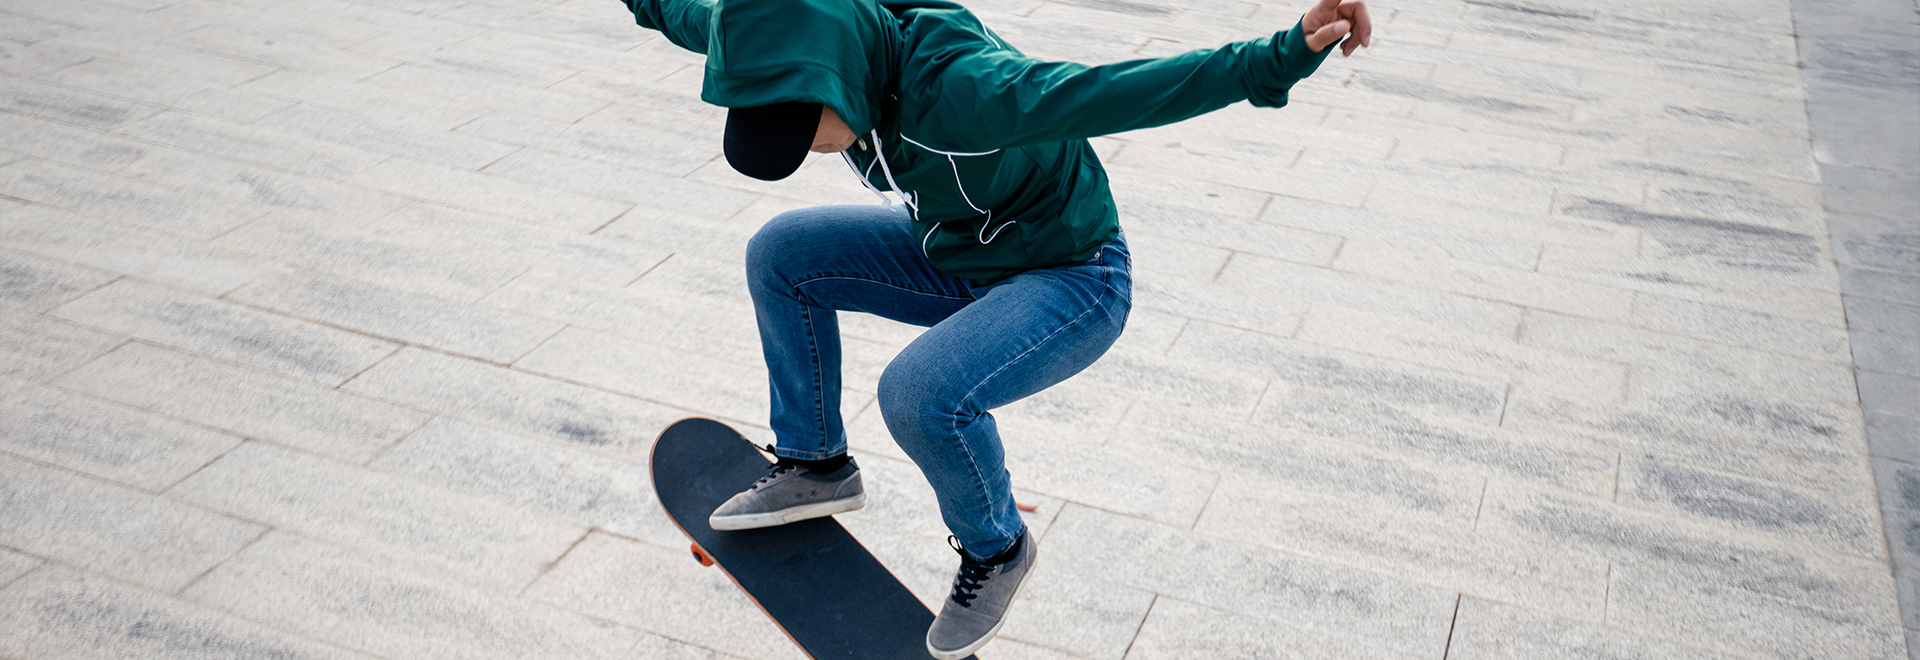 skateboarding-longboard-shortboard-cruiser-introduction